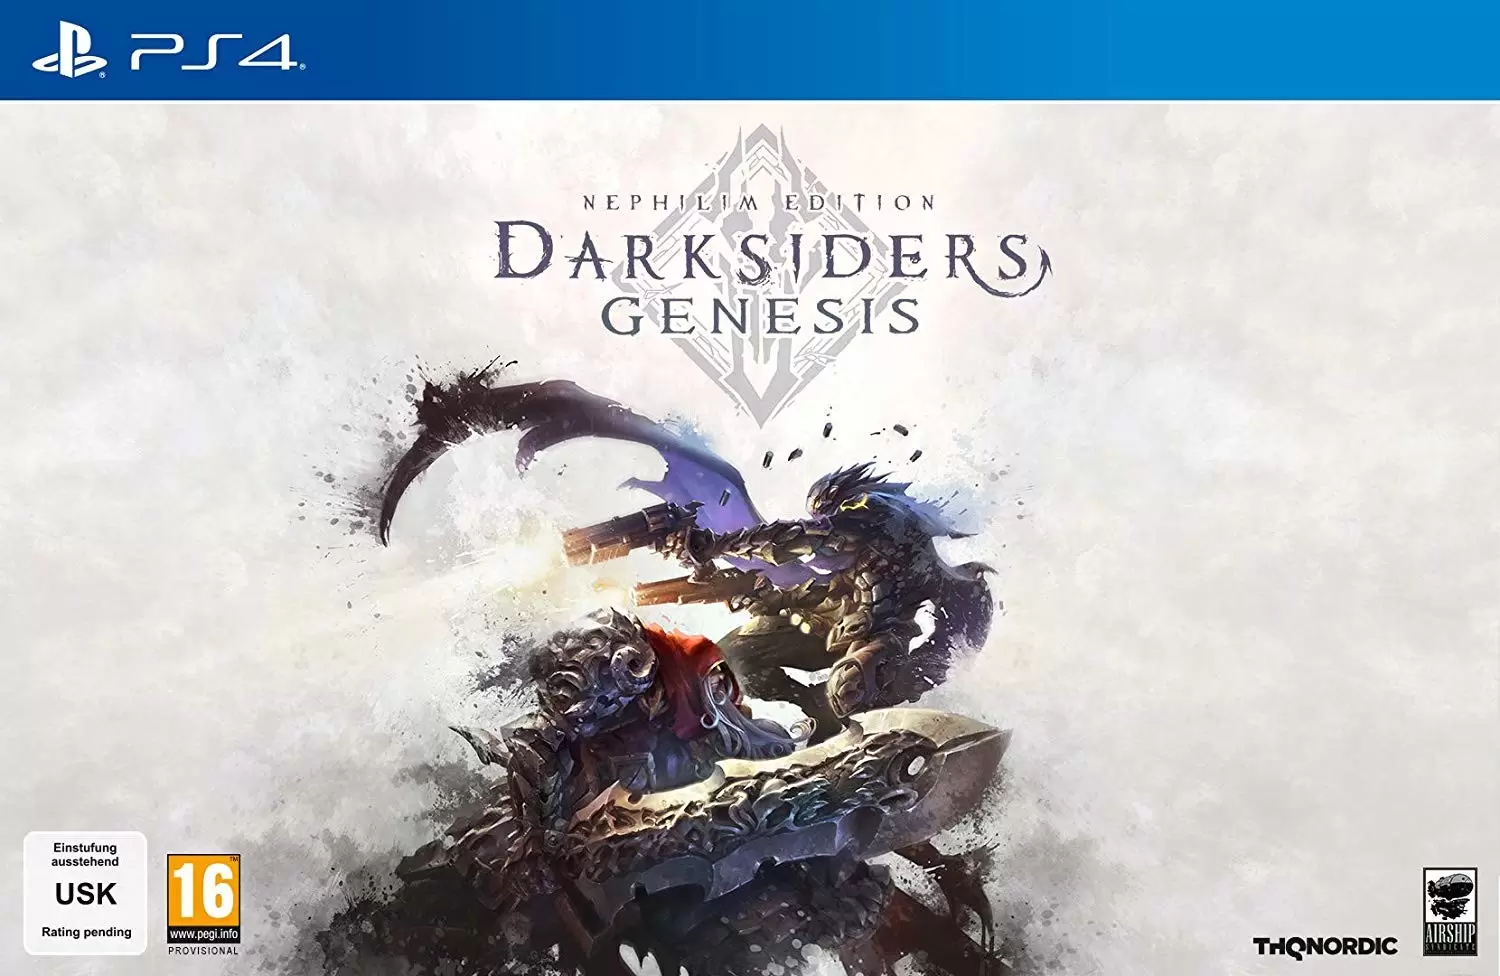 PS4 Games - Darksiders Genesis - Nephilim Edition